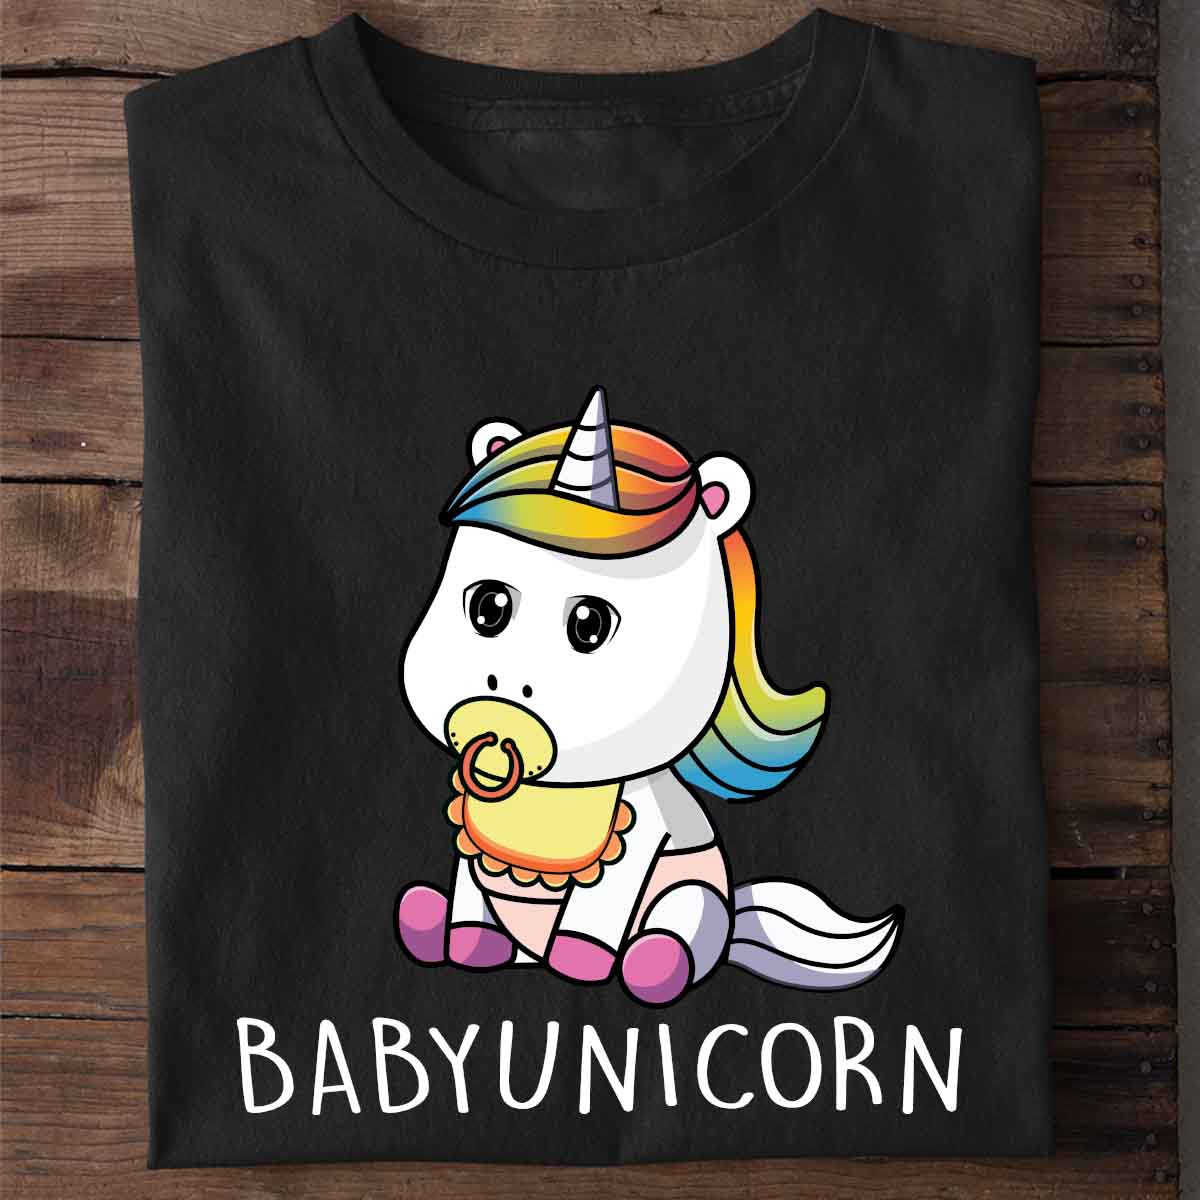 Babyunicorn - Shirt Unisex